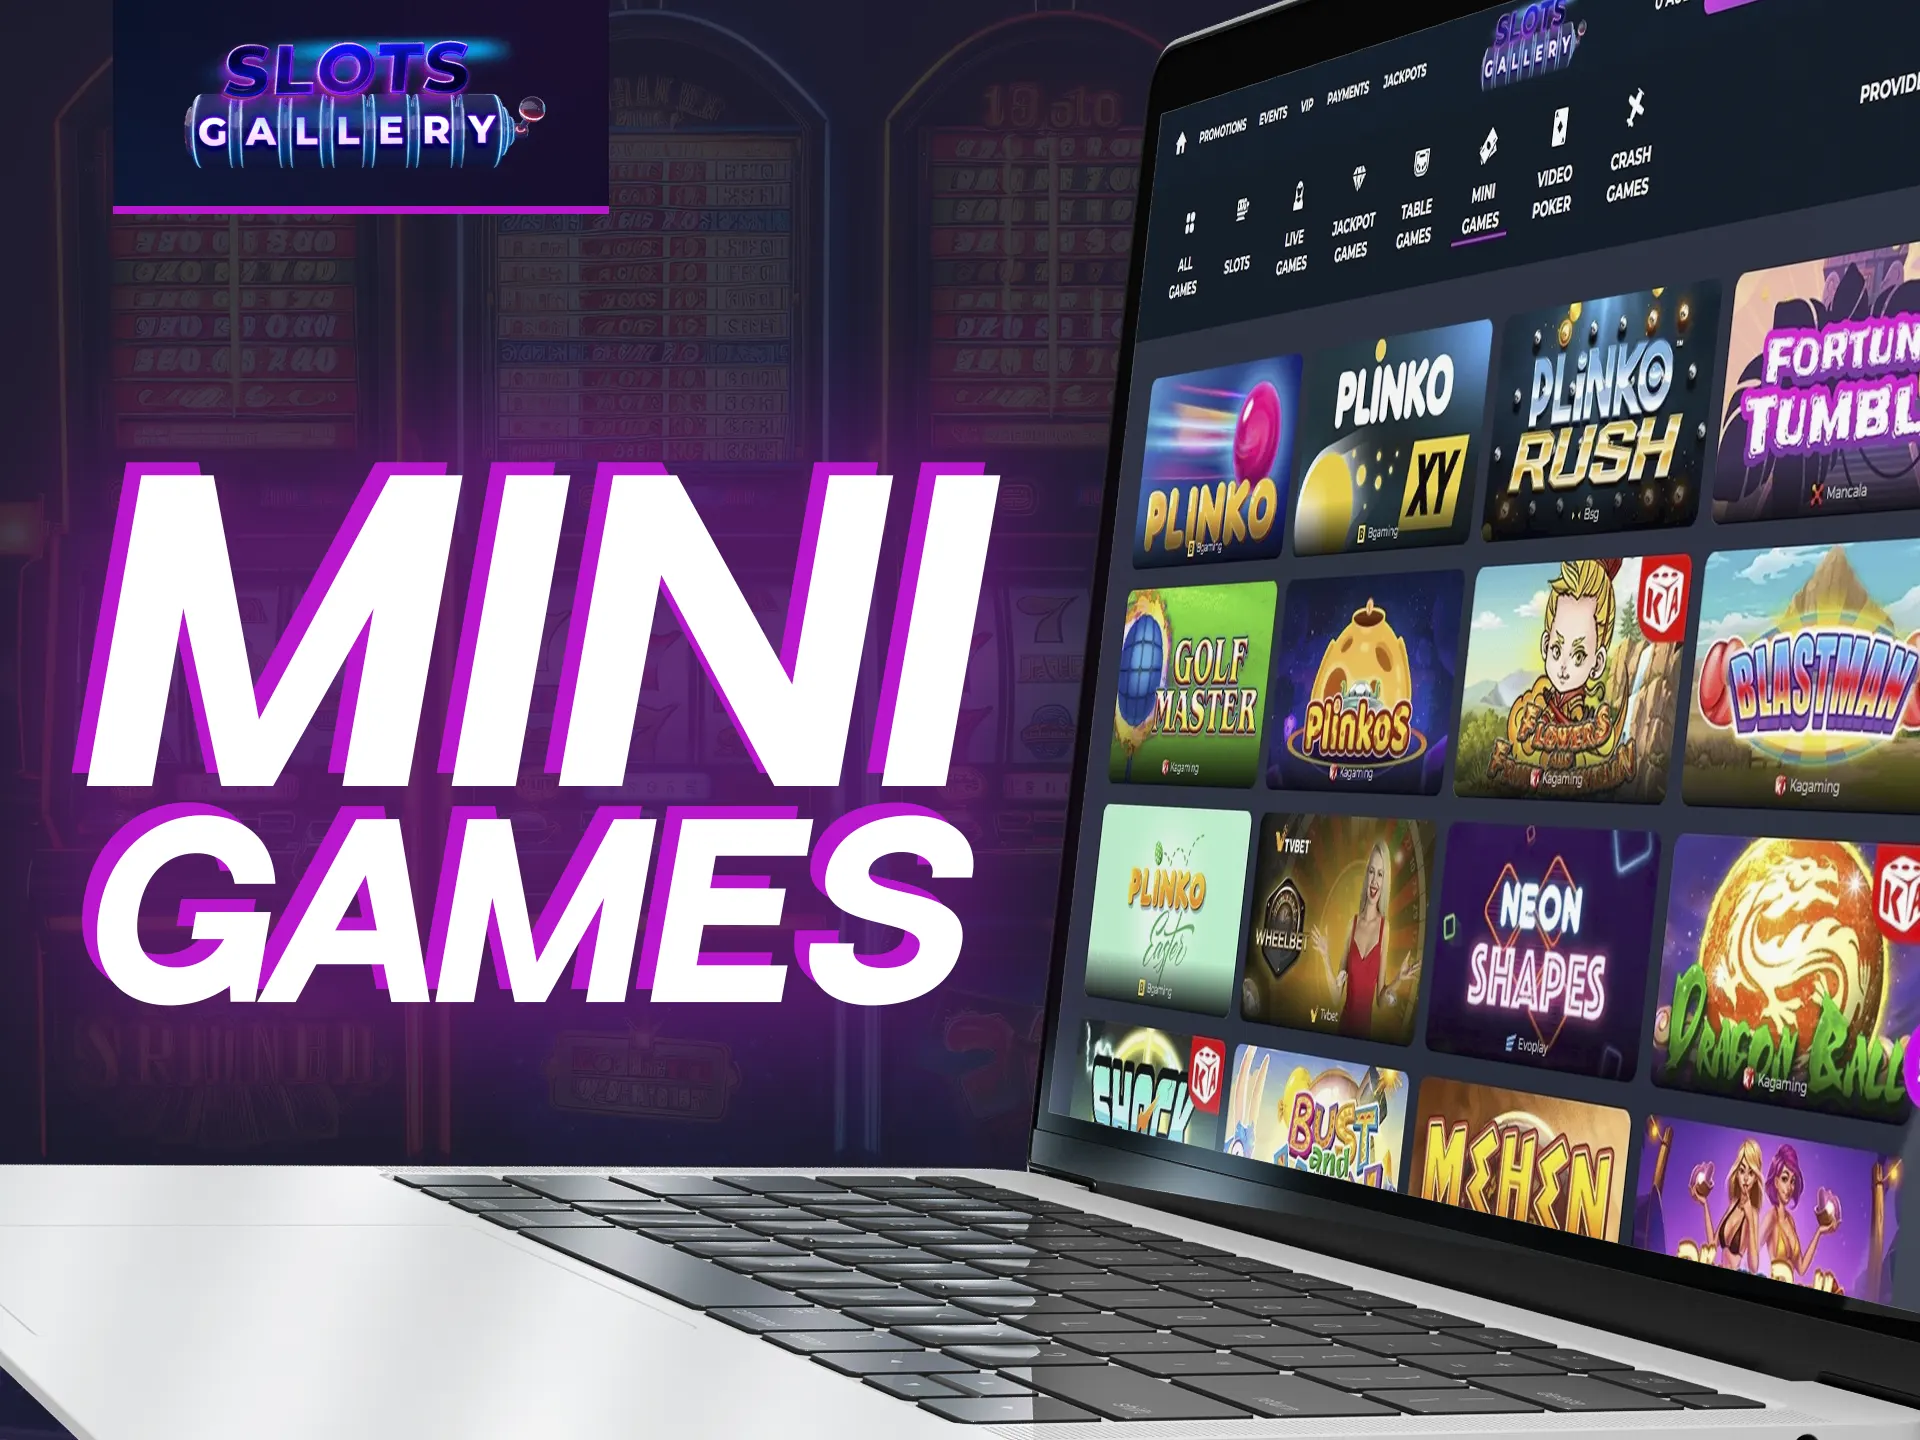 Enjoy quick, simple Mini Games at Slots Gallery casino.